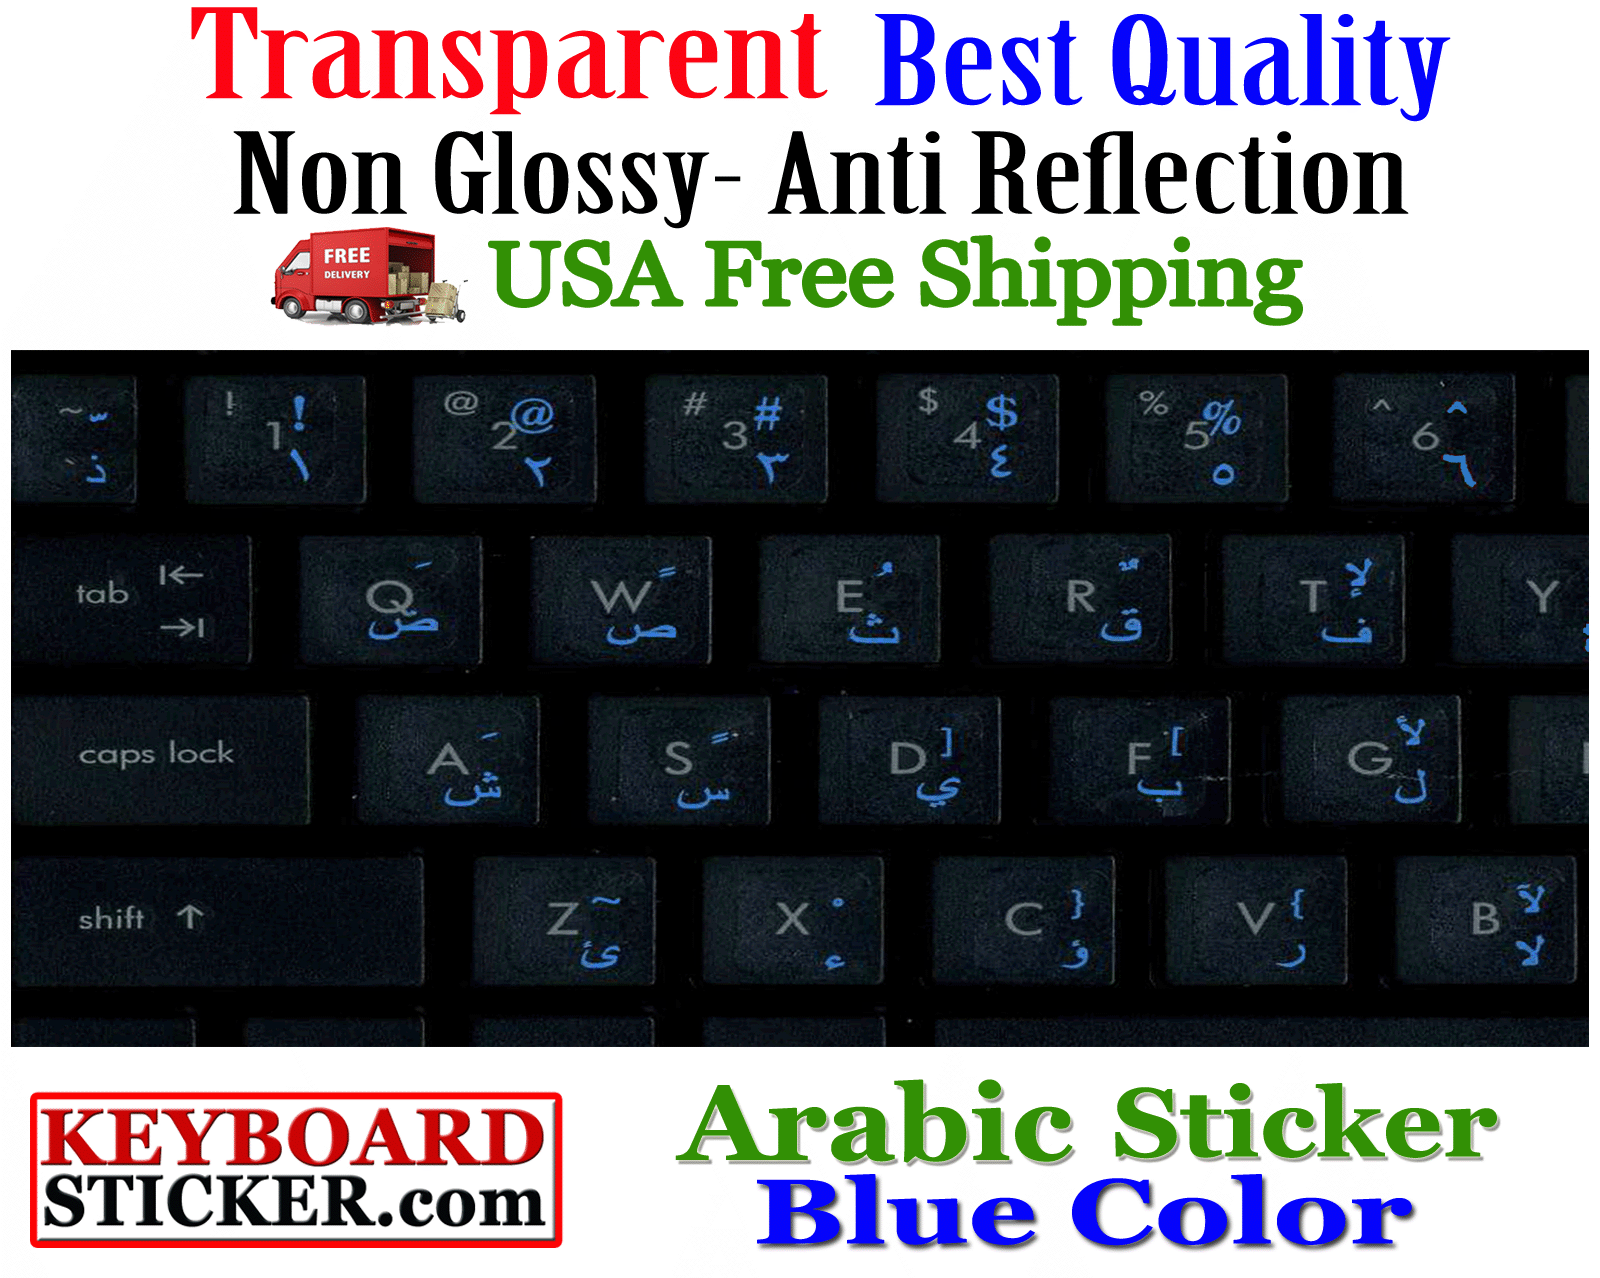 Arabic Keyboard Sticker Transparent Blue Letters Printed In Korea, Best Quality!